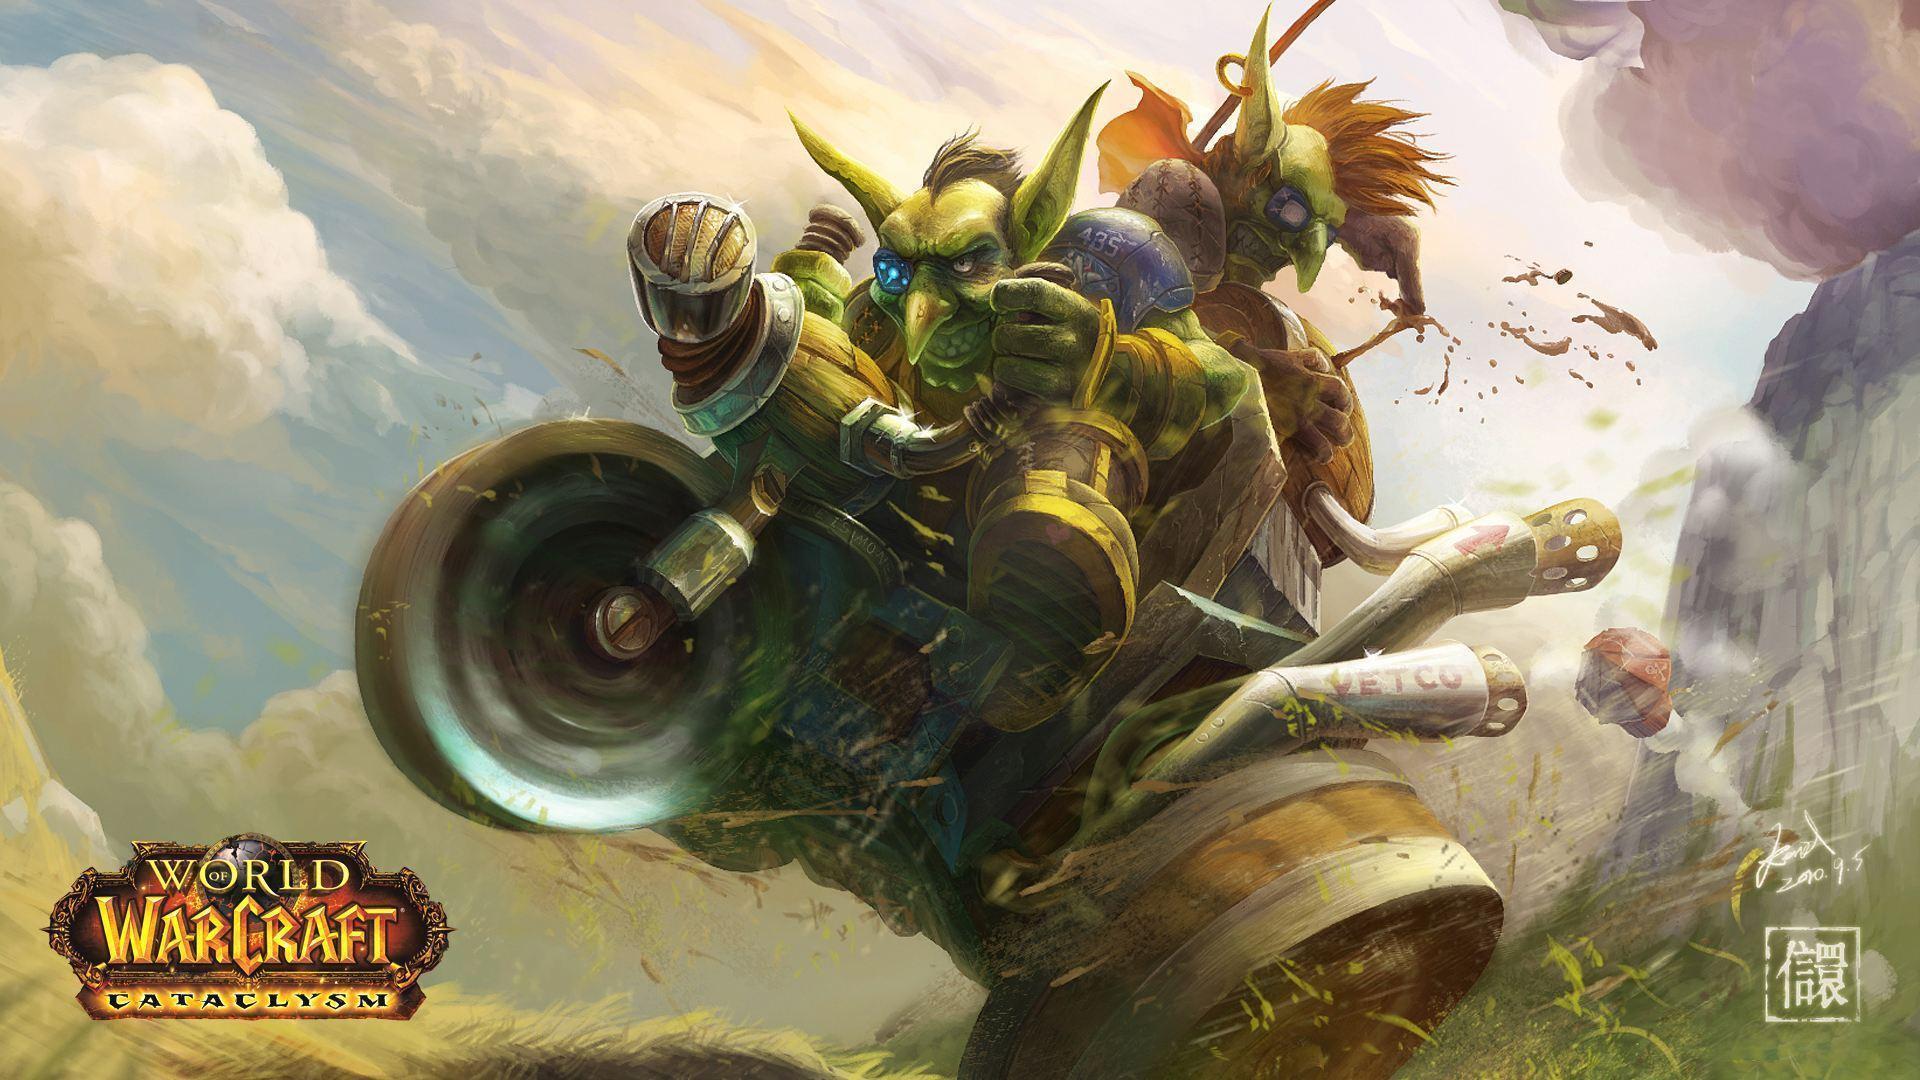 World of Warcraft: Cataclysm Wallpaper in HD